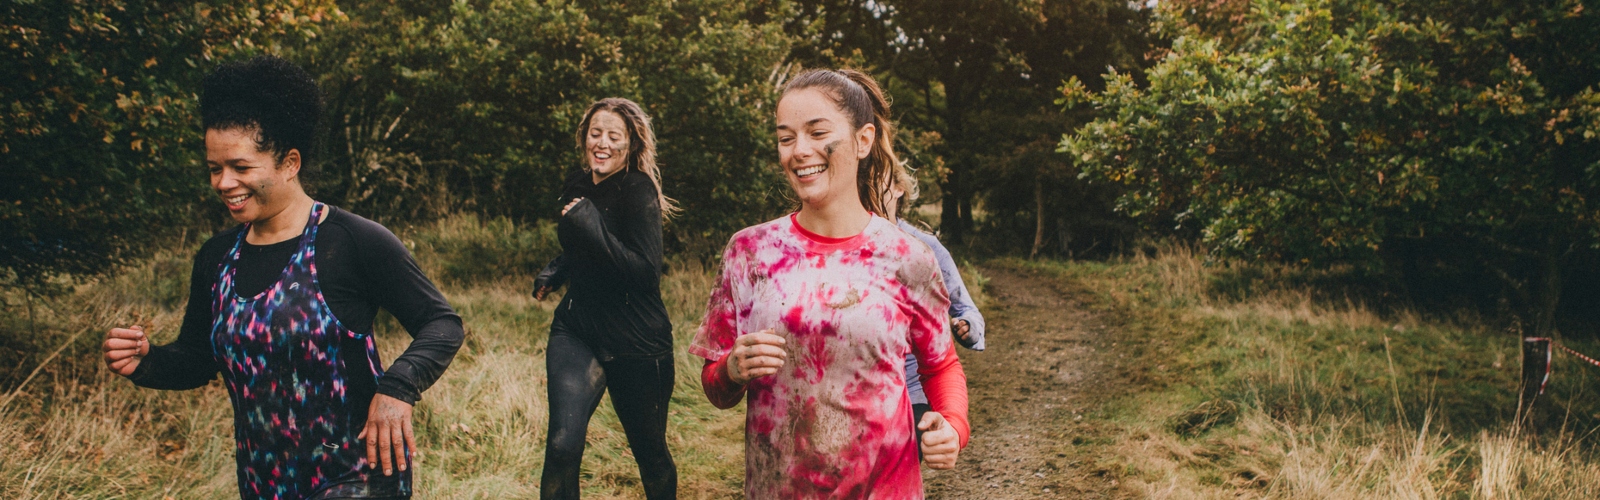 Three young women trail running